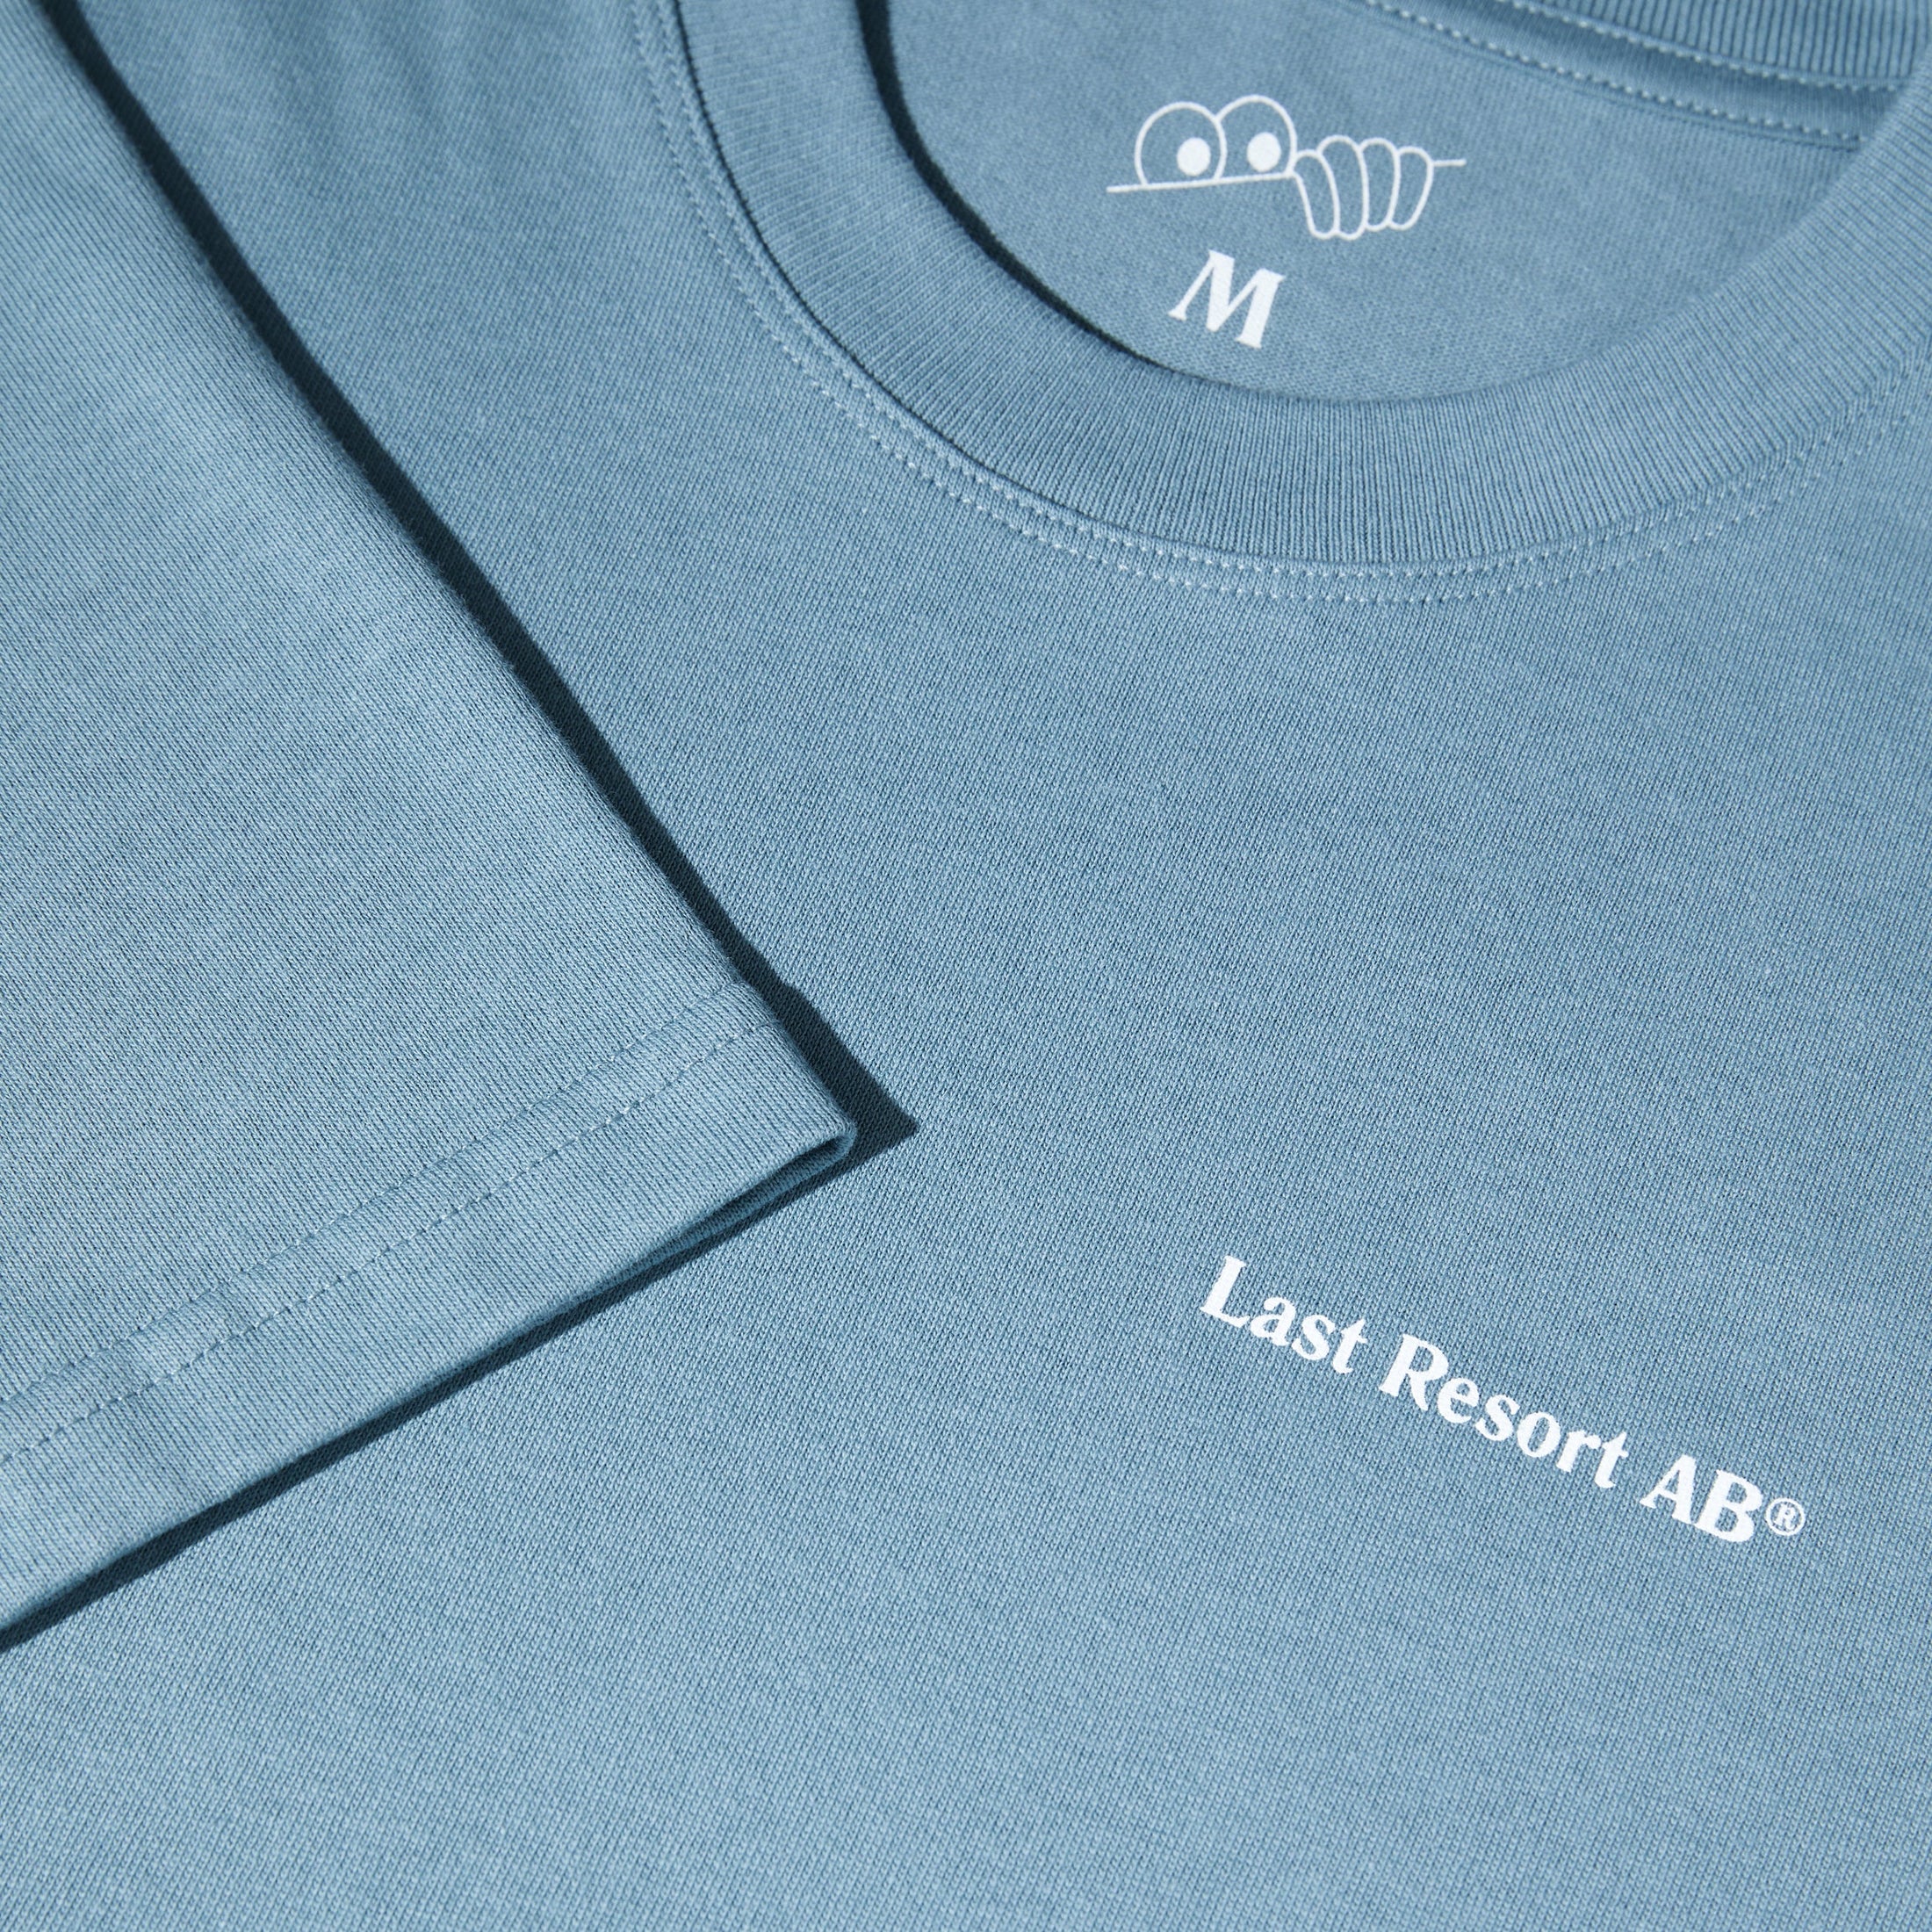 Last Resort AB Vandal Short Sleeve T-Shirt Blue Mirage